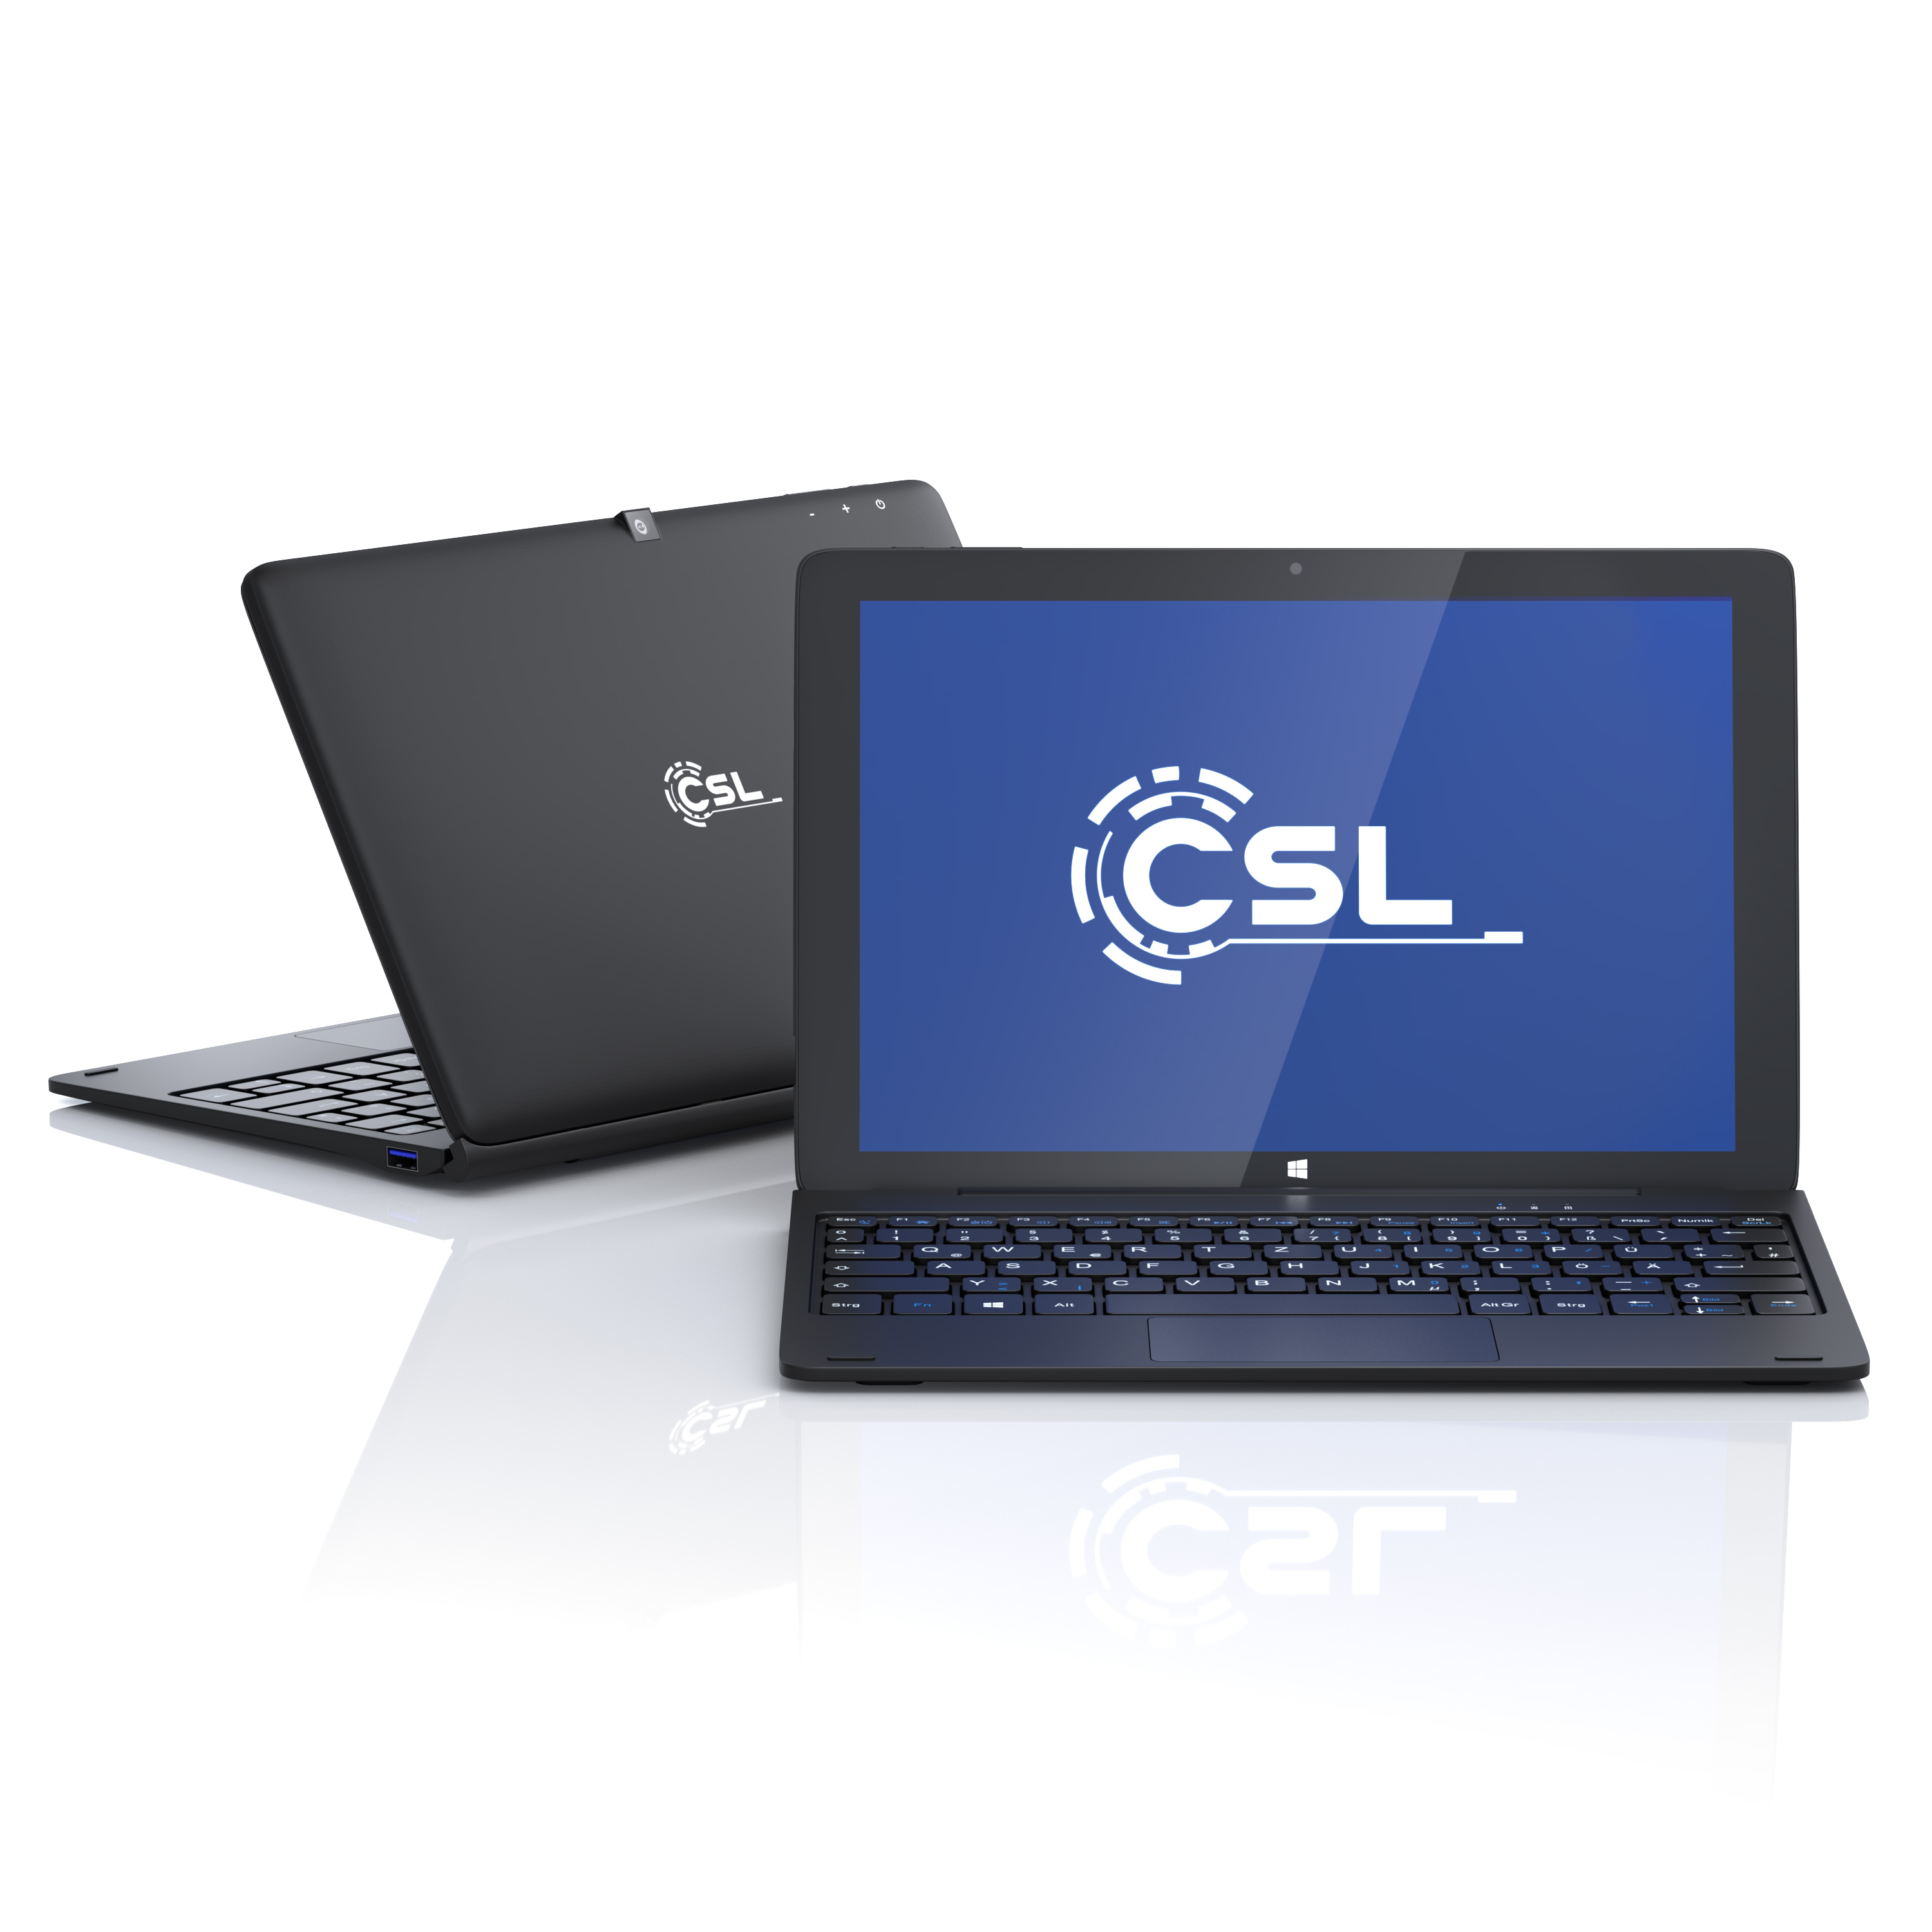 CSL Panther Tab HD Pro + 3.1 512 USB 11 Tasche, 10,1 / GB 128 Win GB, Tablet, Zoll, schwarz 